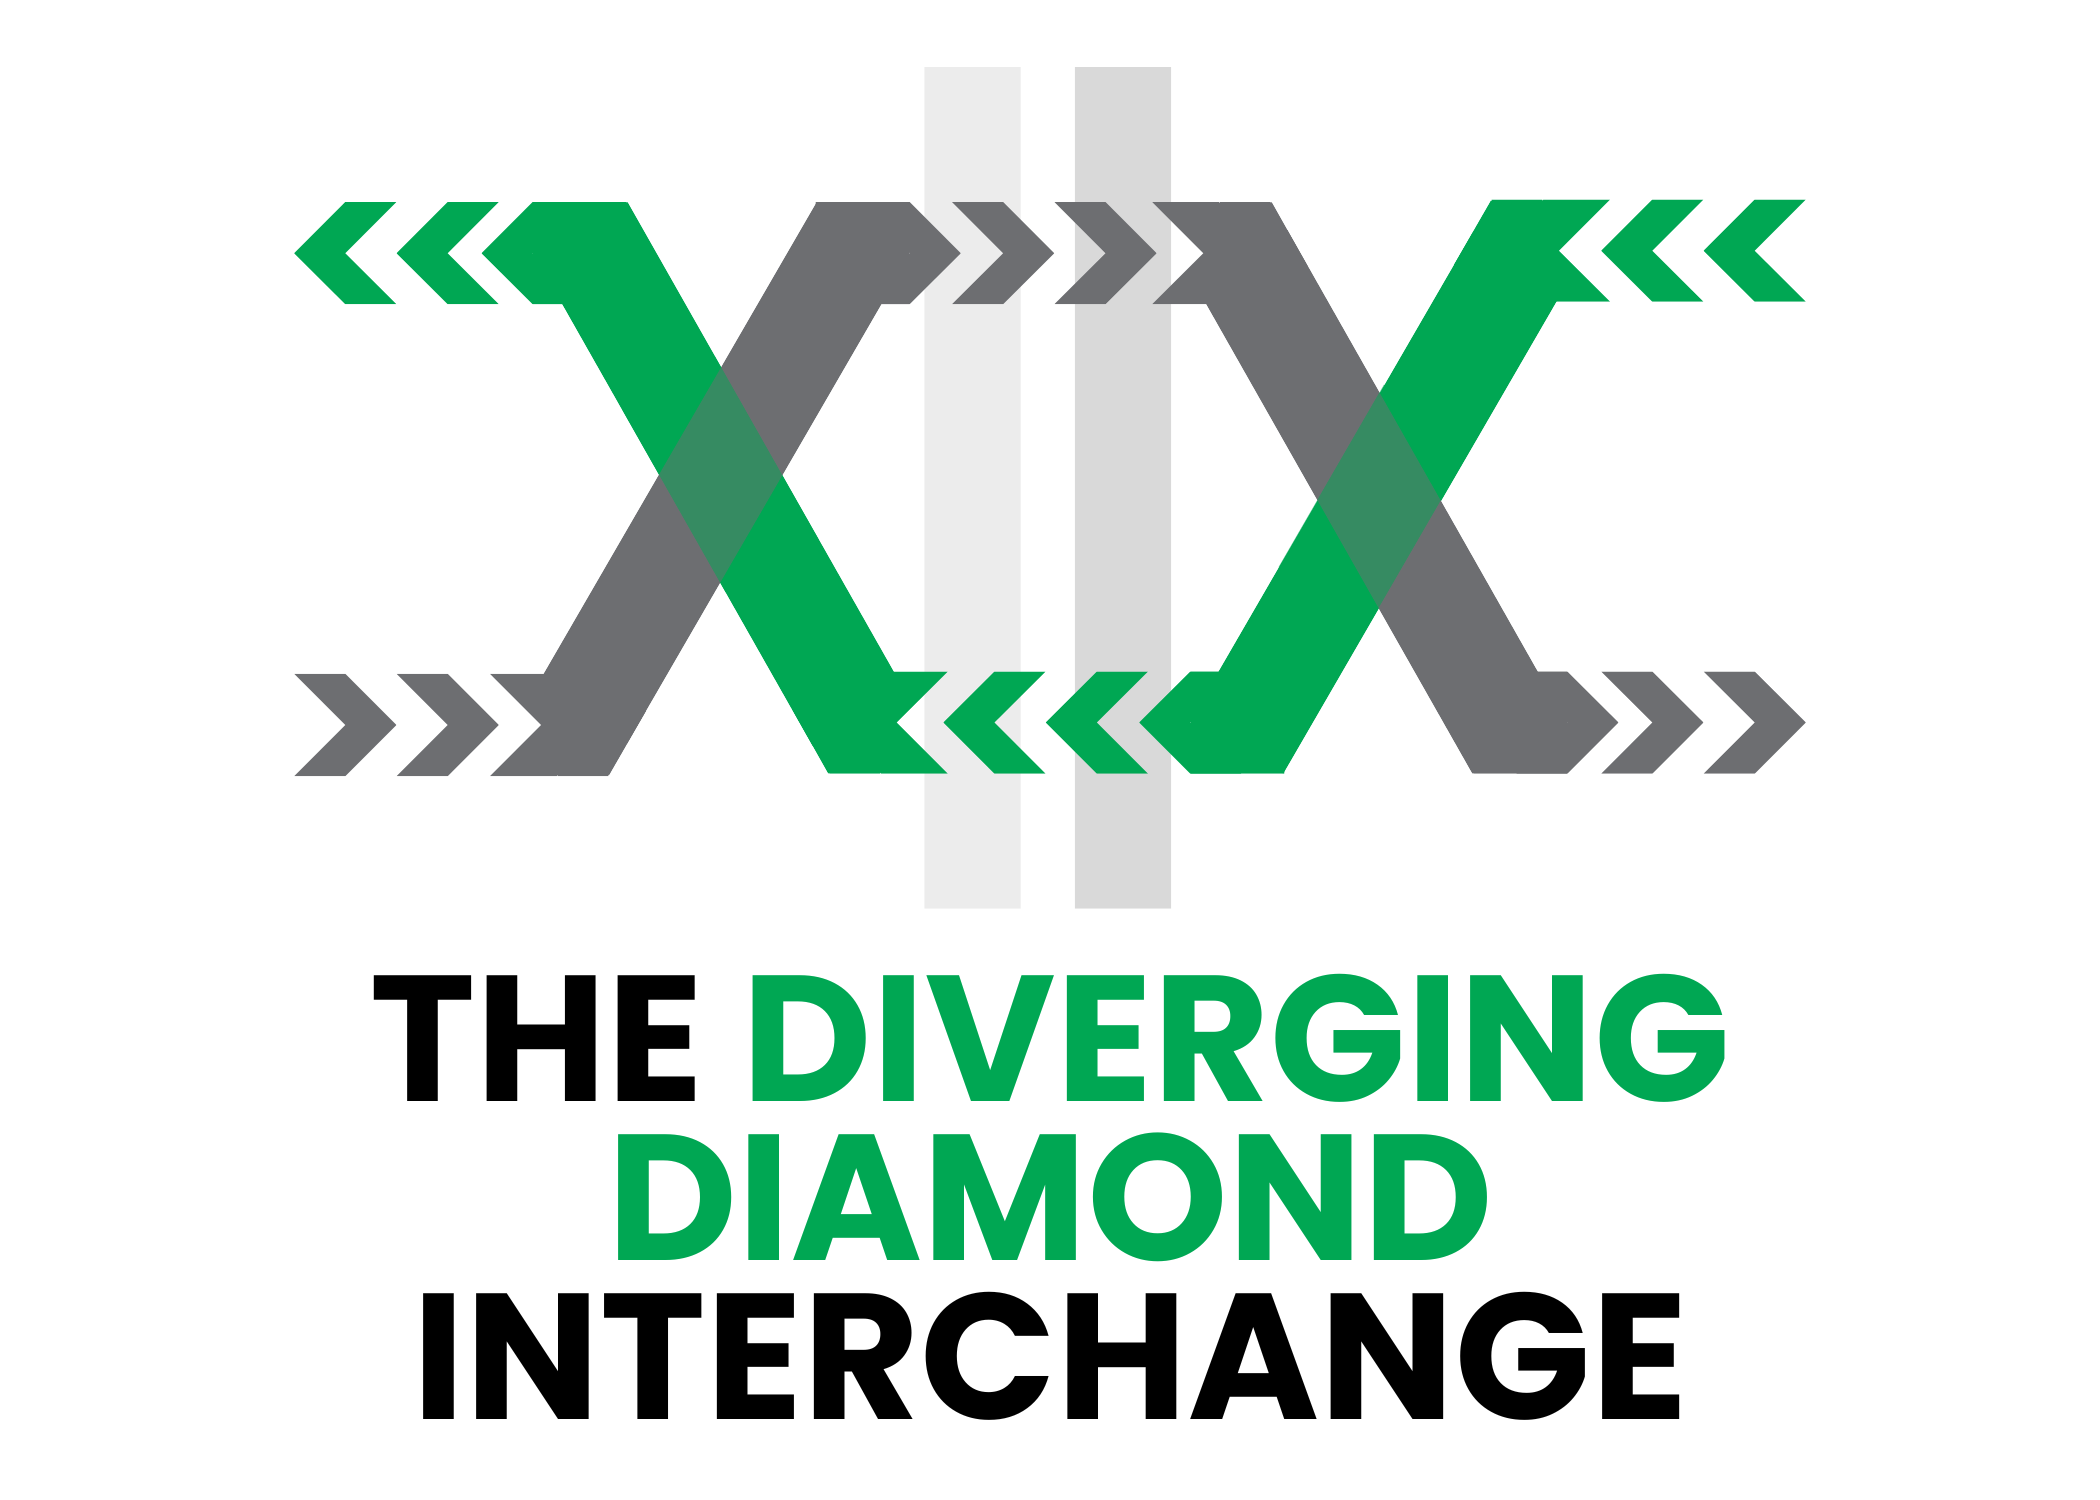 Diverging Diamond Interchange graphic